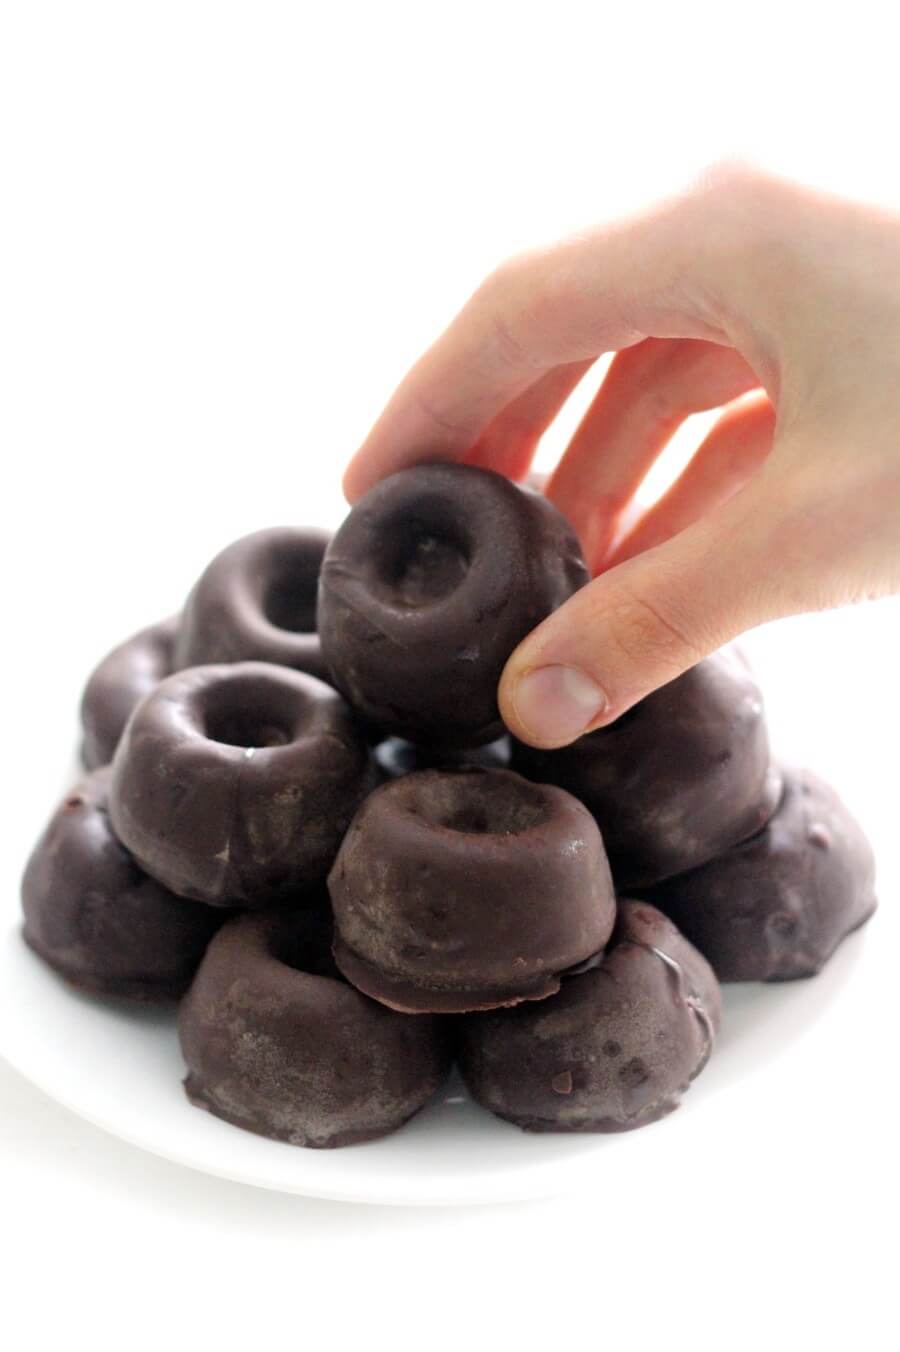 hand grabbing a gluten-free chocolate-covered mini doughnut from plate